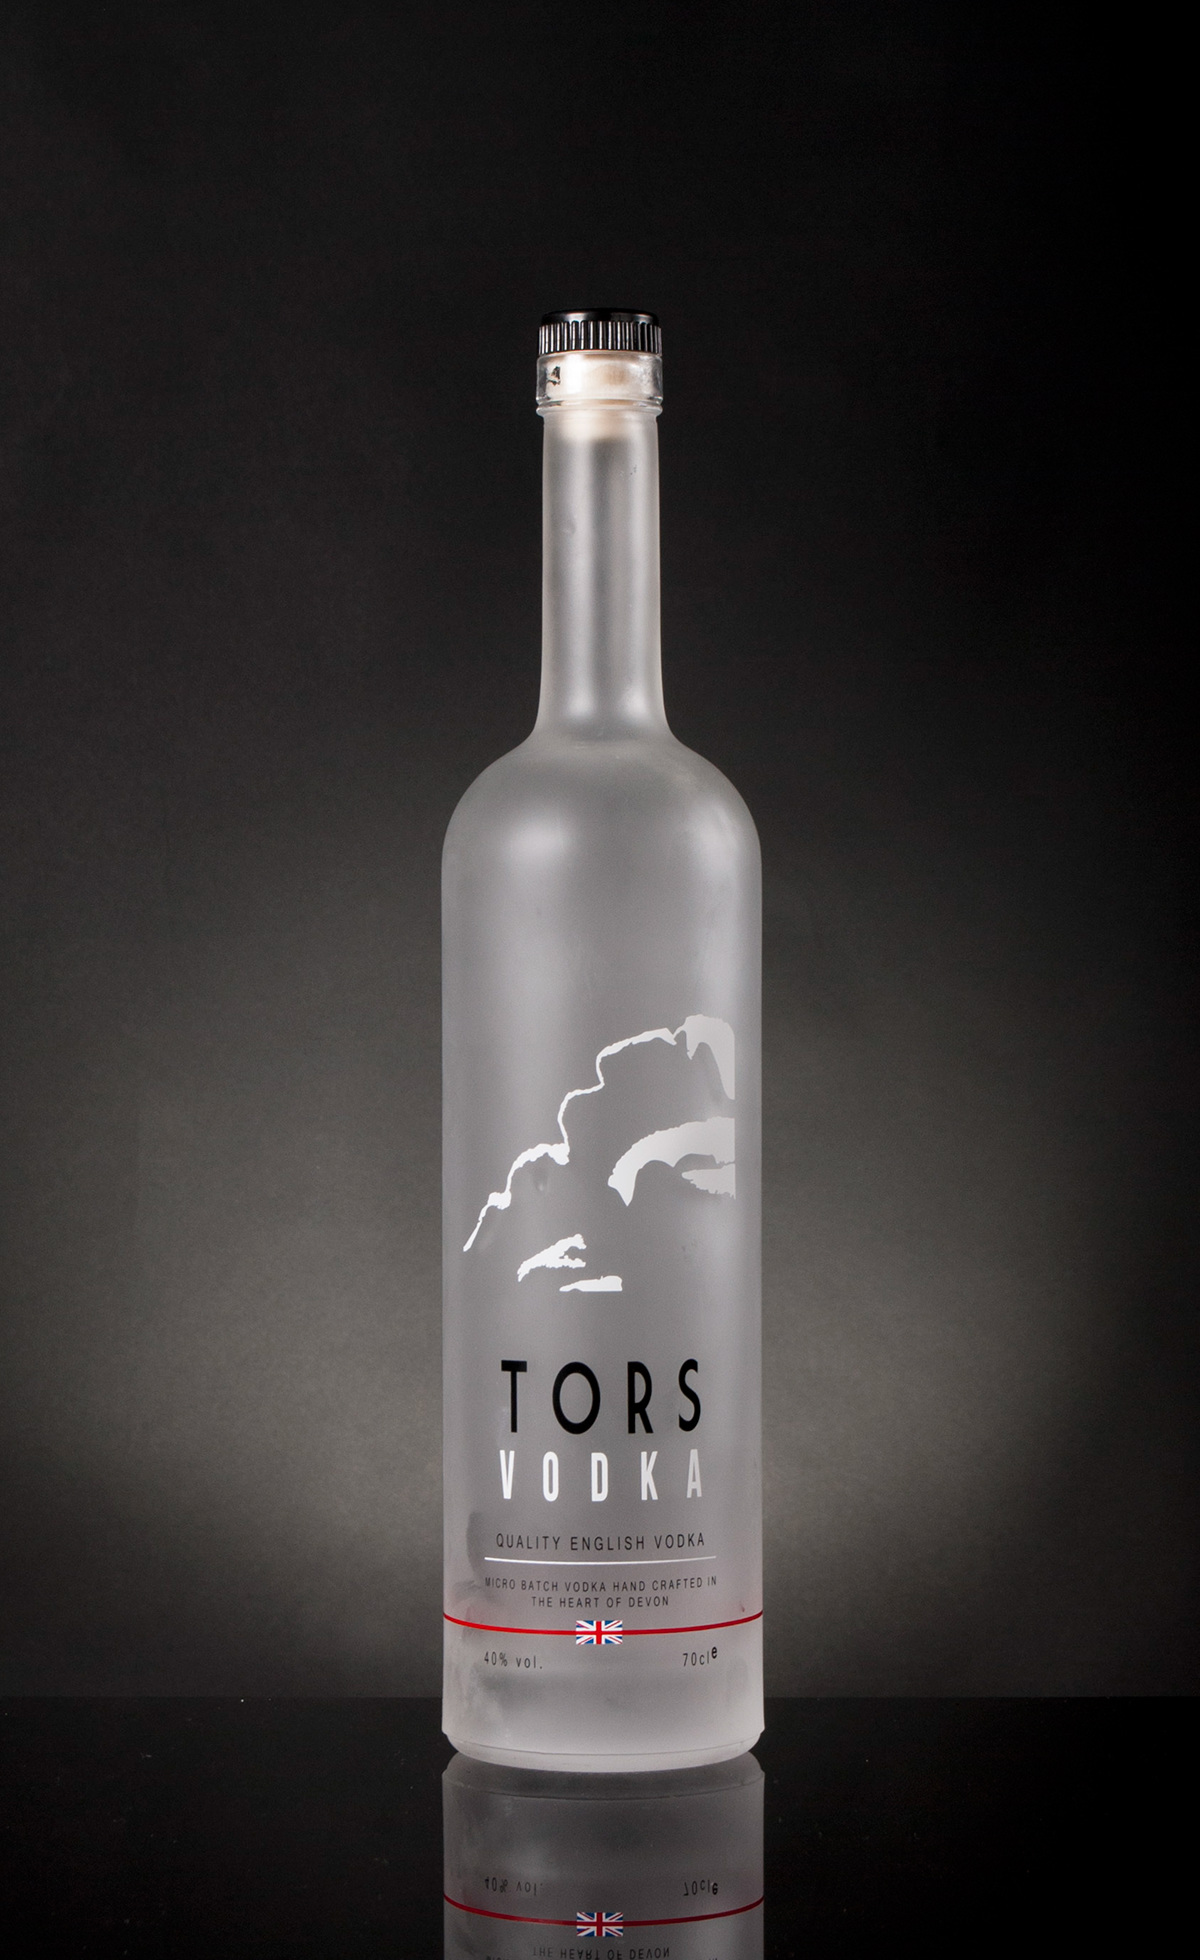 Adobe Portfolio Vodka bottle alcohol identity design Tors devon dartmoor england greygoose